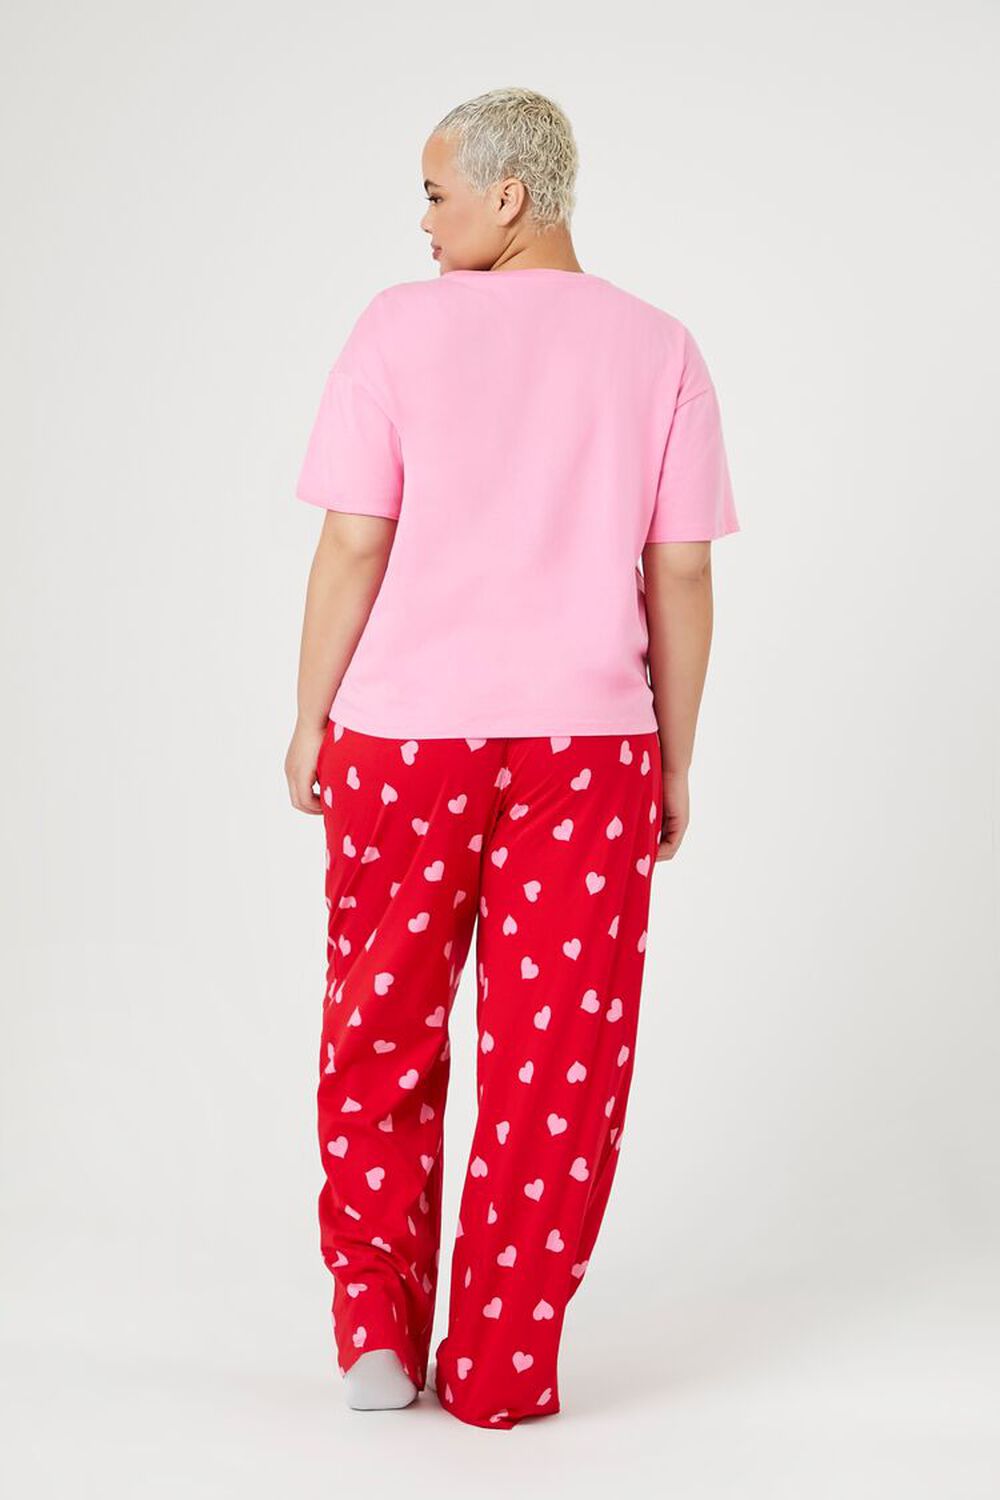 Forever 21 Women's Heart Print Shirt & Short Pajama Set in Ivory